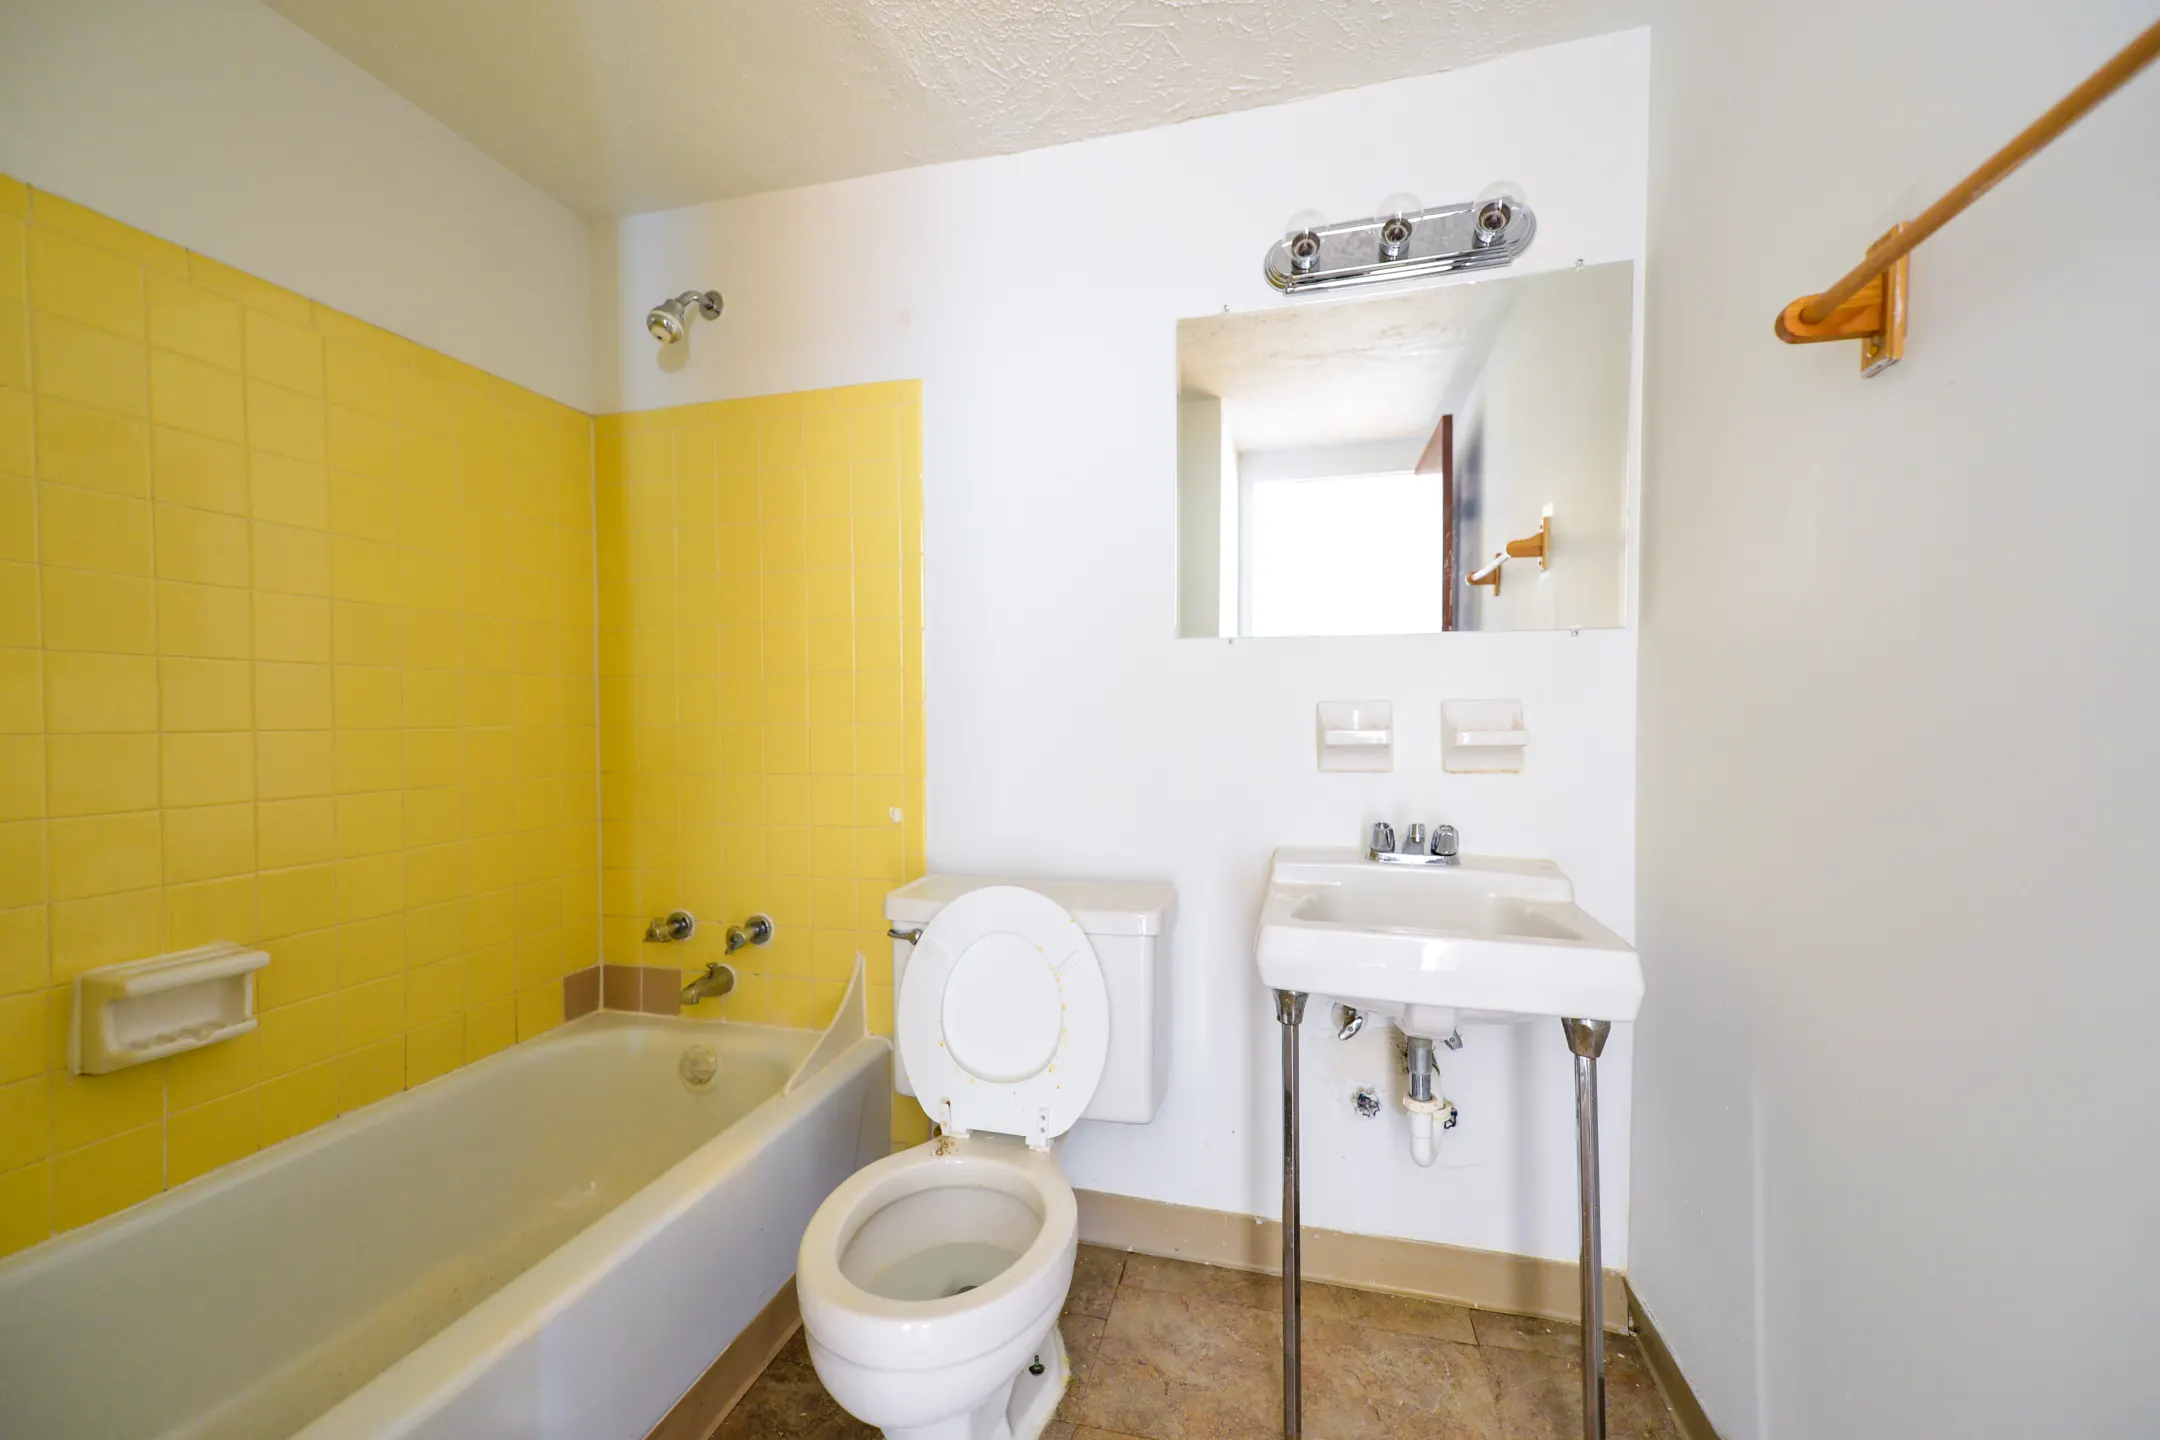 Bathroom - Winton Woods Apartments - Cincinnati, OH